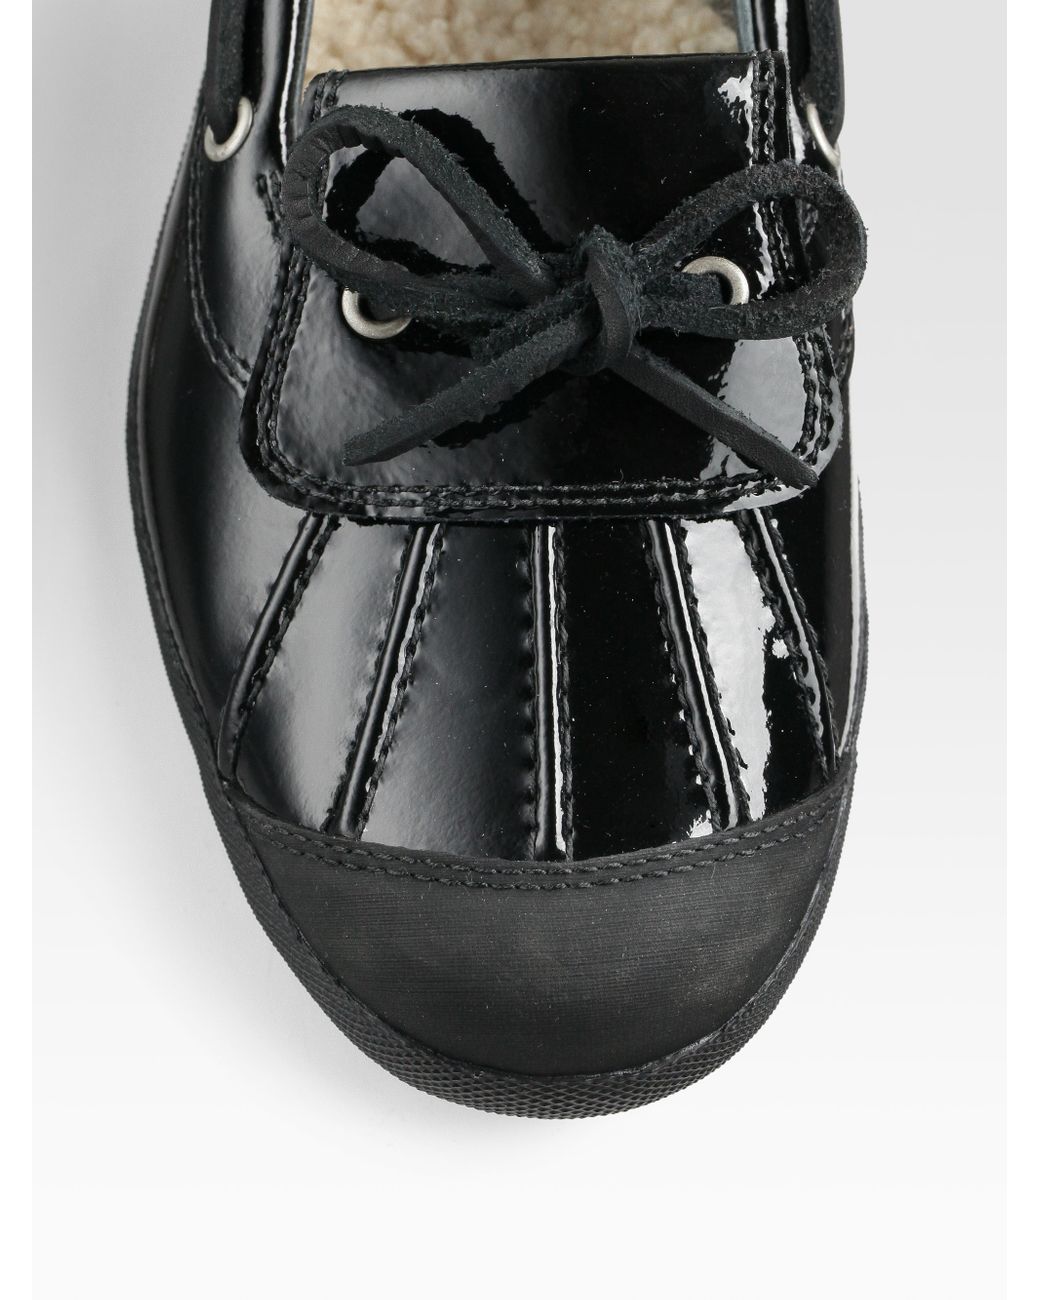 UGG Women's Black Ashdale Patent Leather Rain Shoes